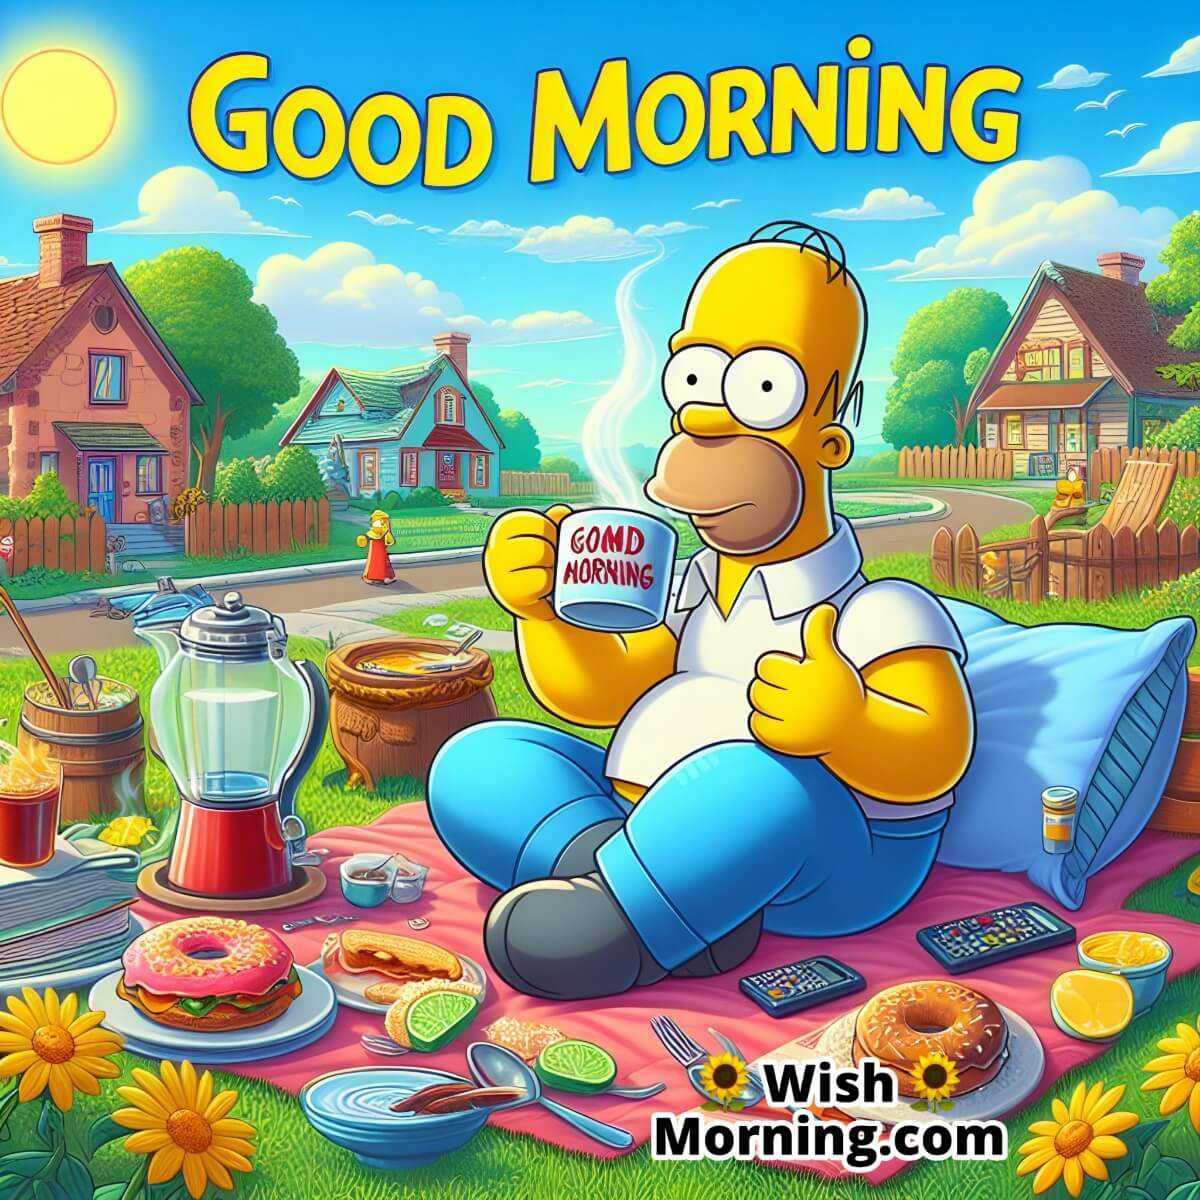 Good Morning Homer Simpson Image